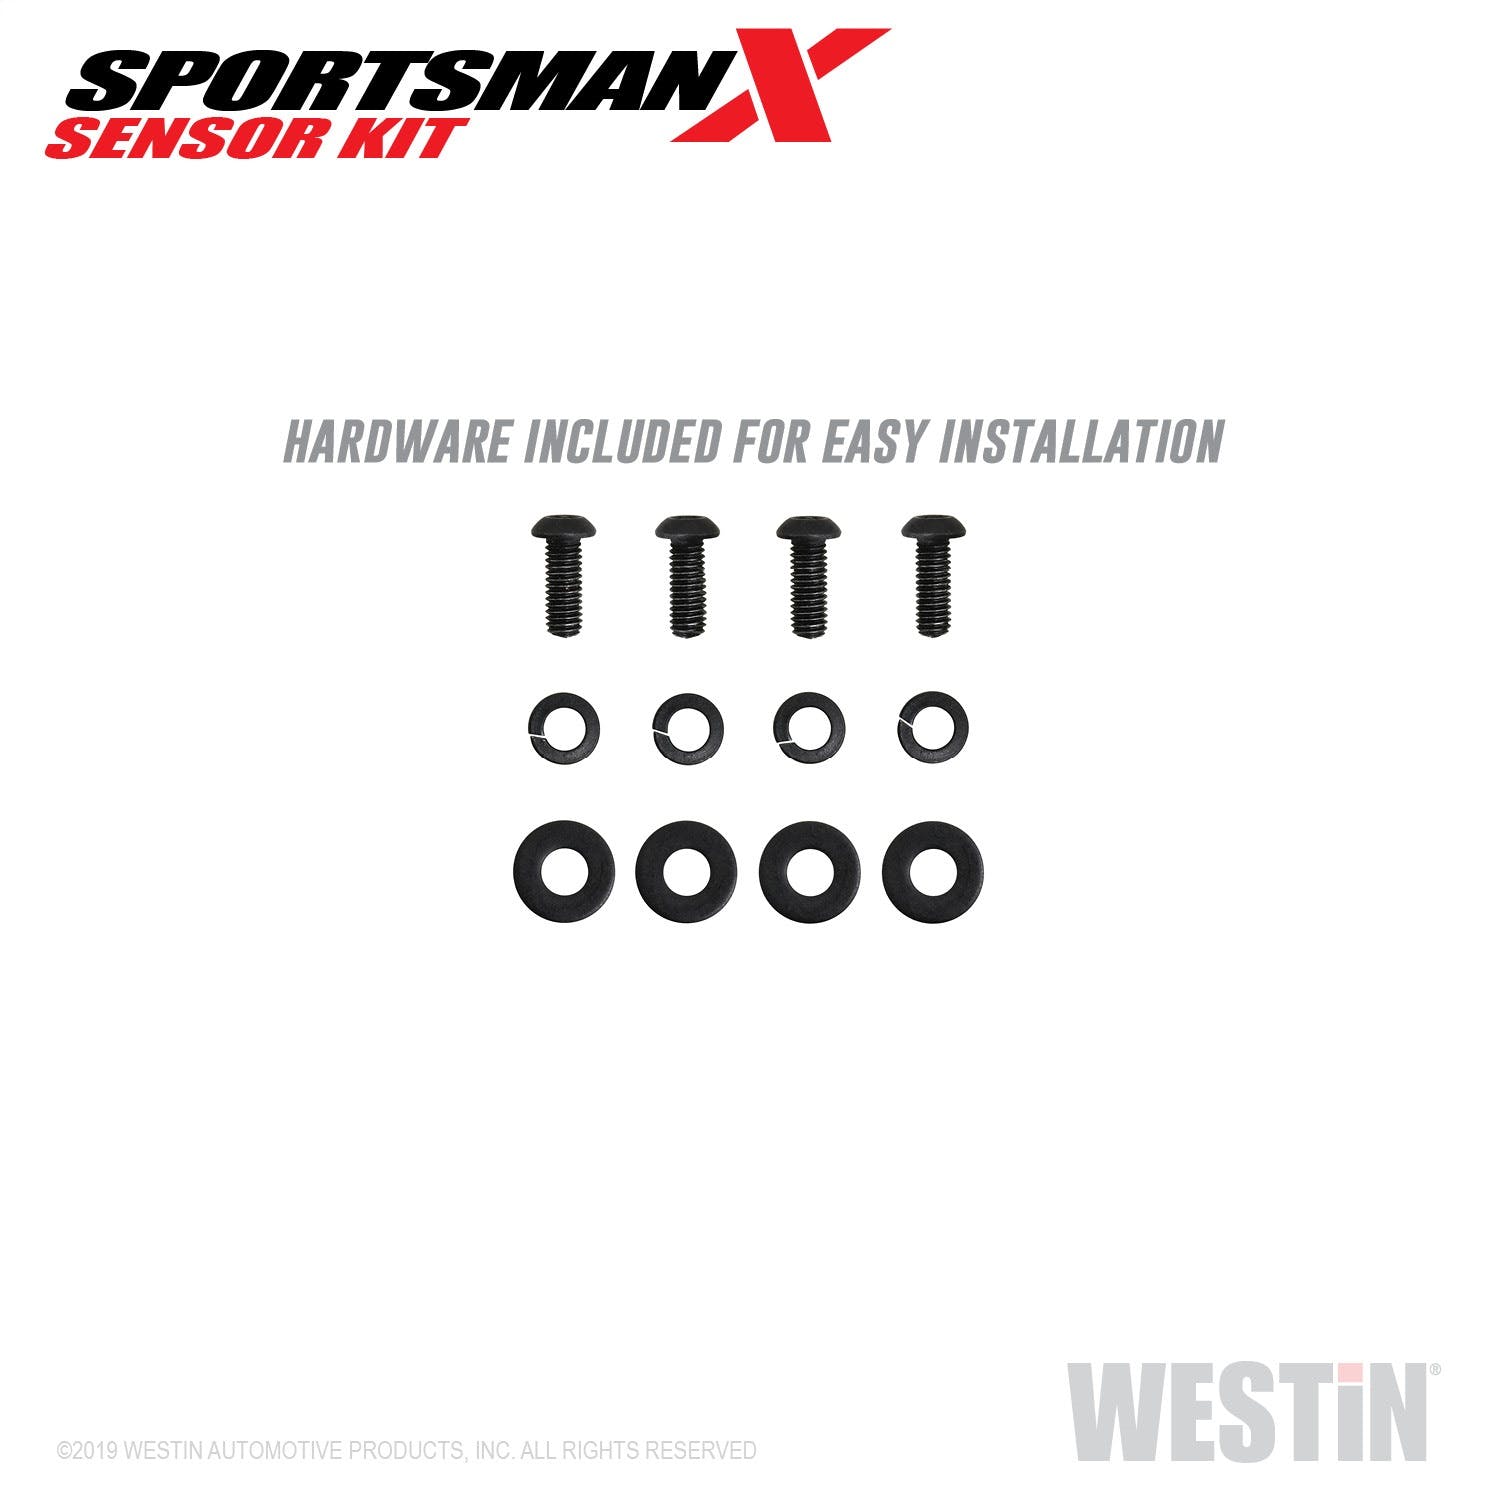 Westin Automotive 40-21025 Sportsman X Sensor Kit Textured Black